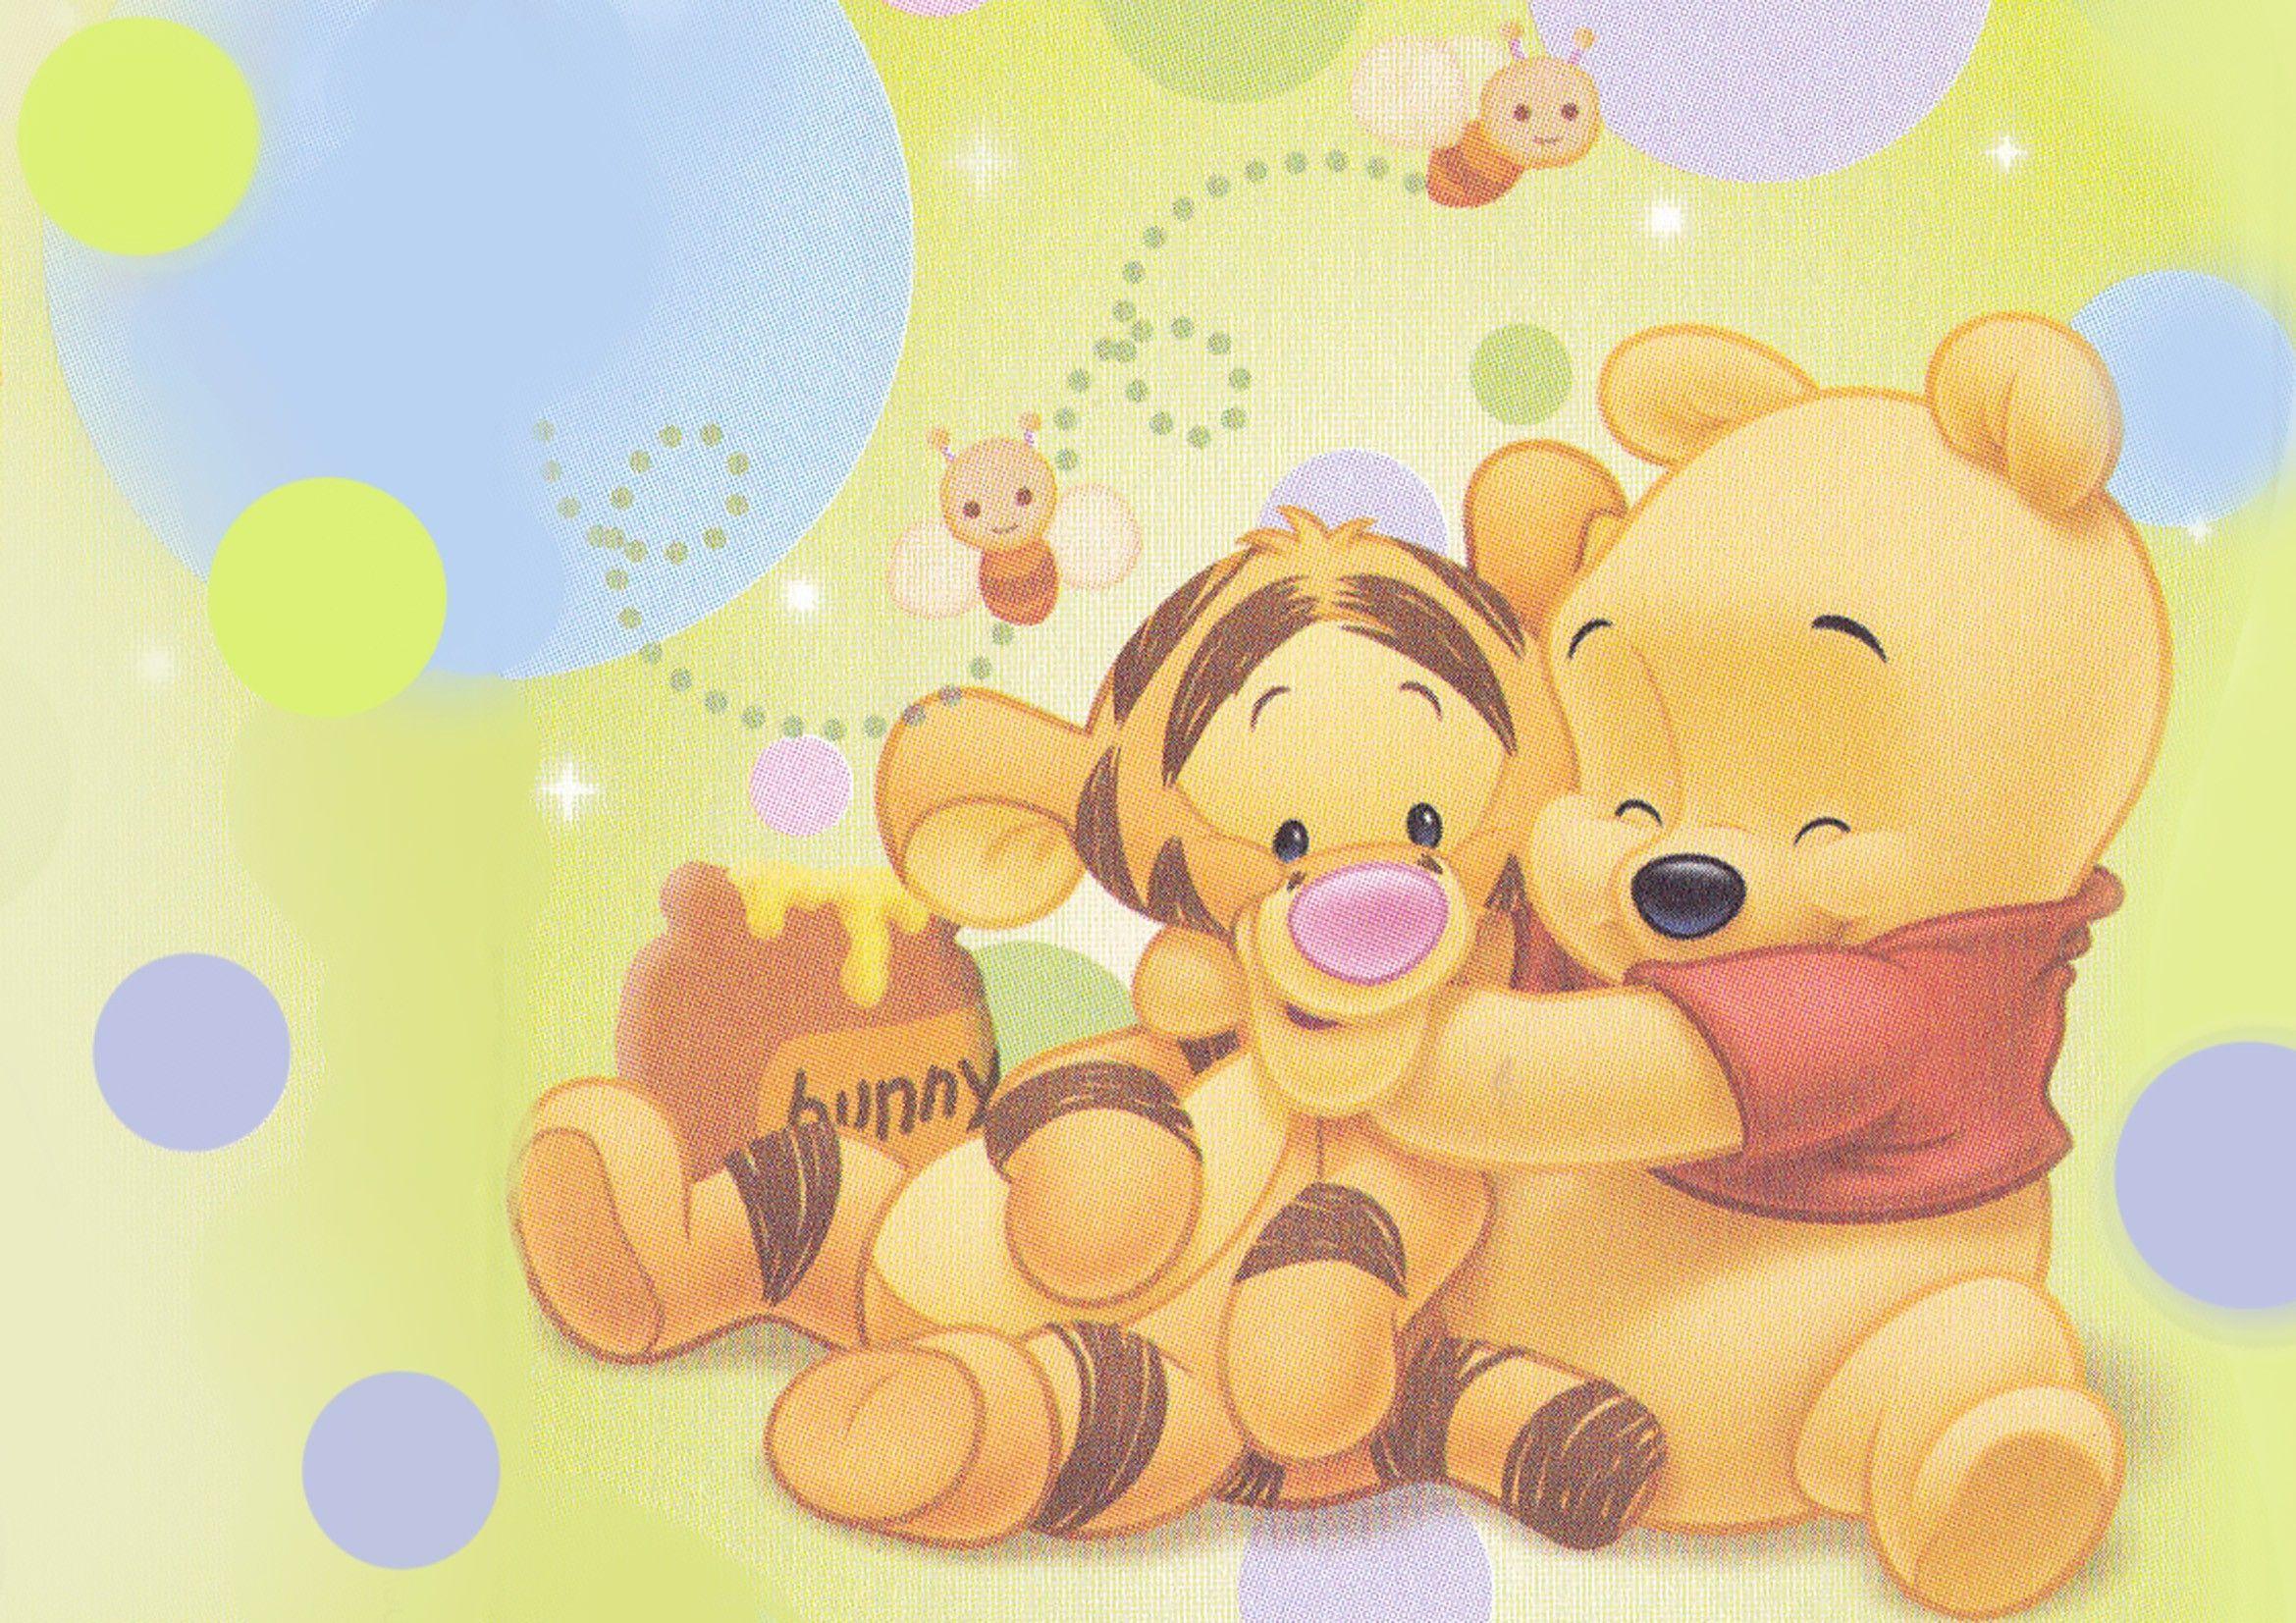 Wallpaper Winnie The Pooh Baby